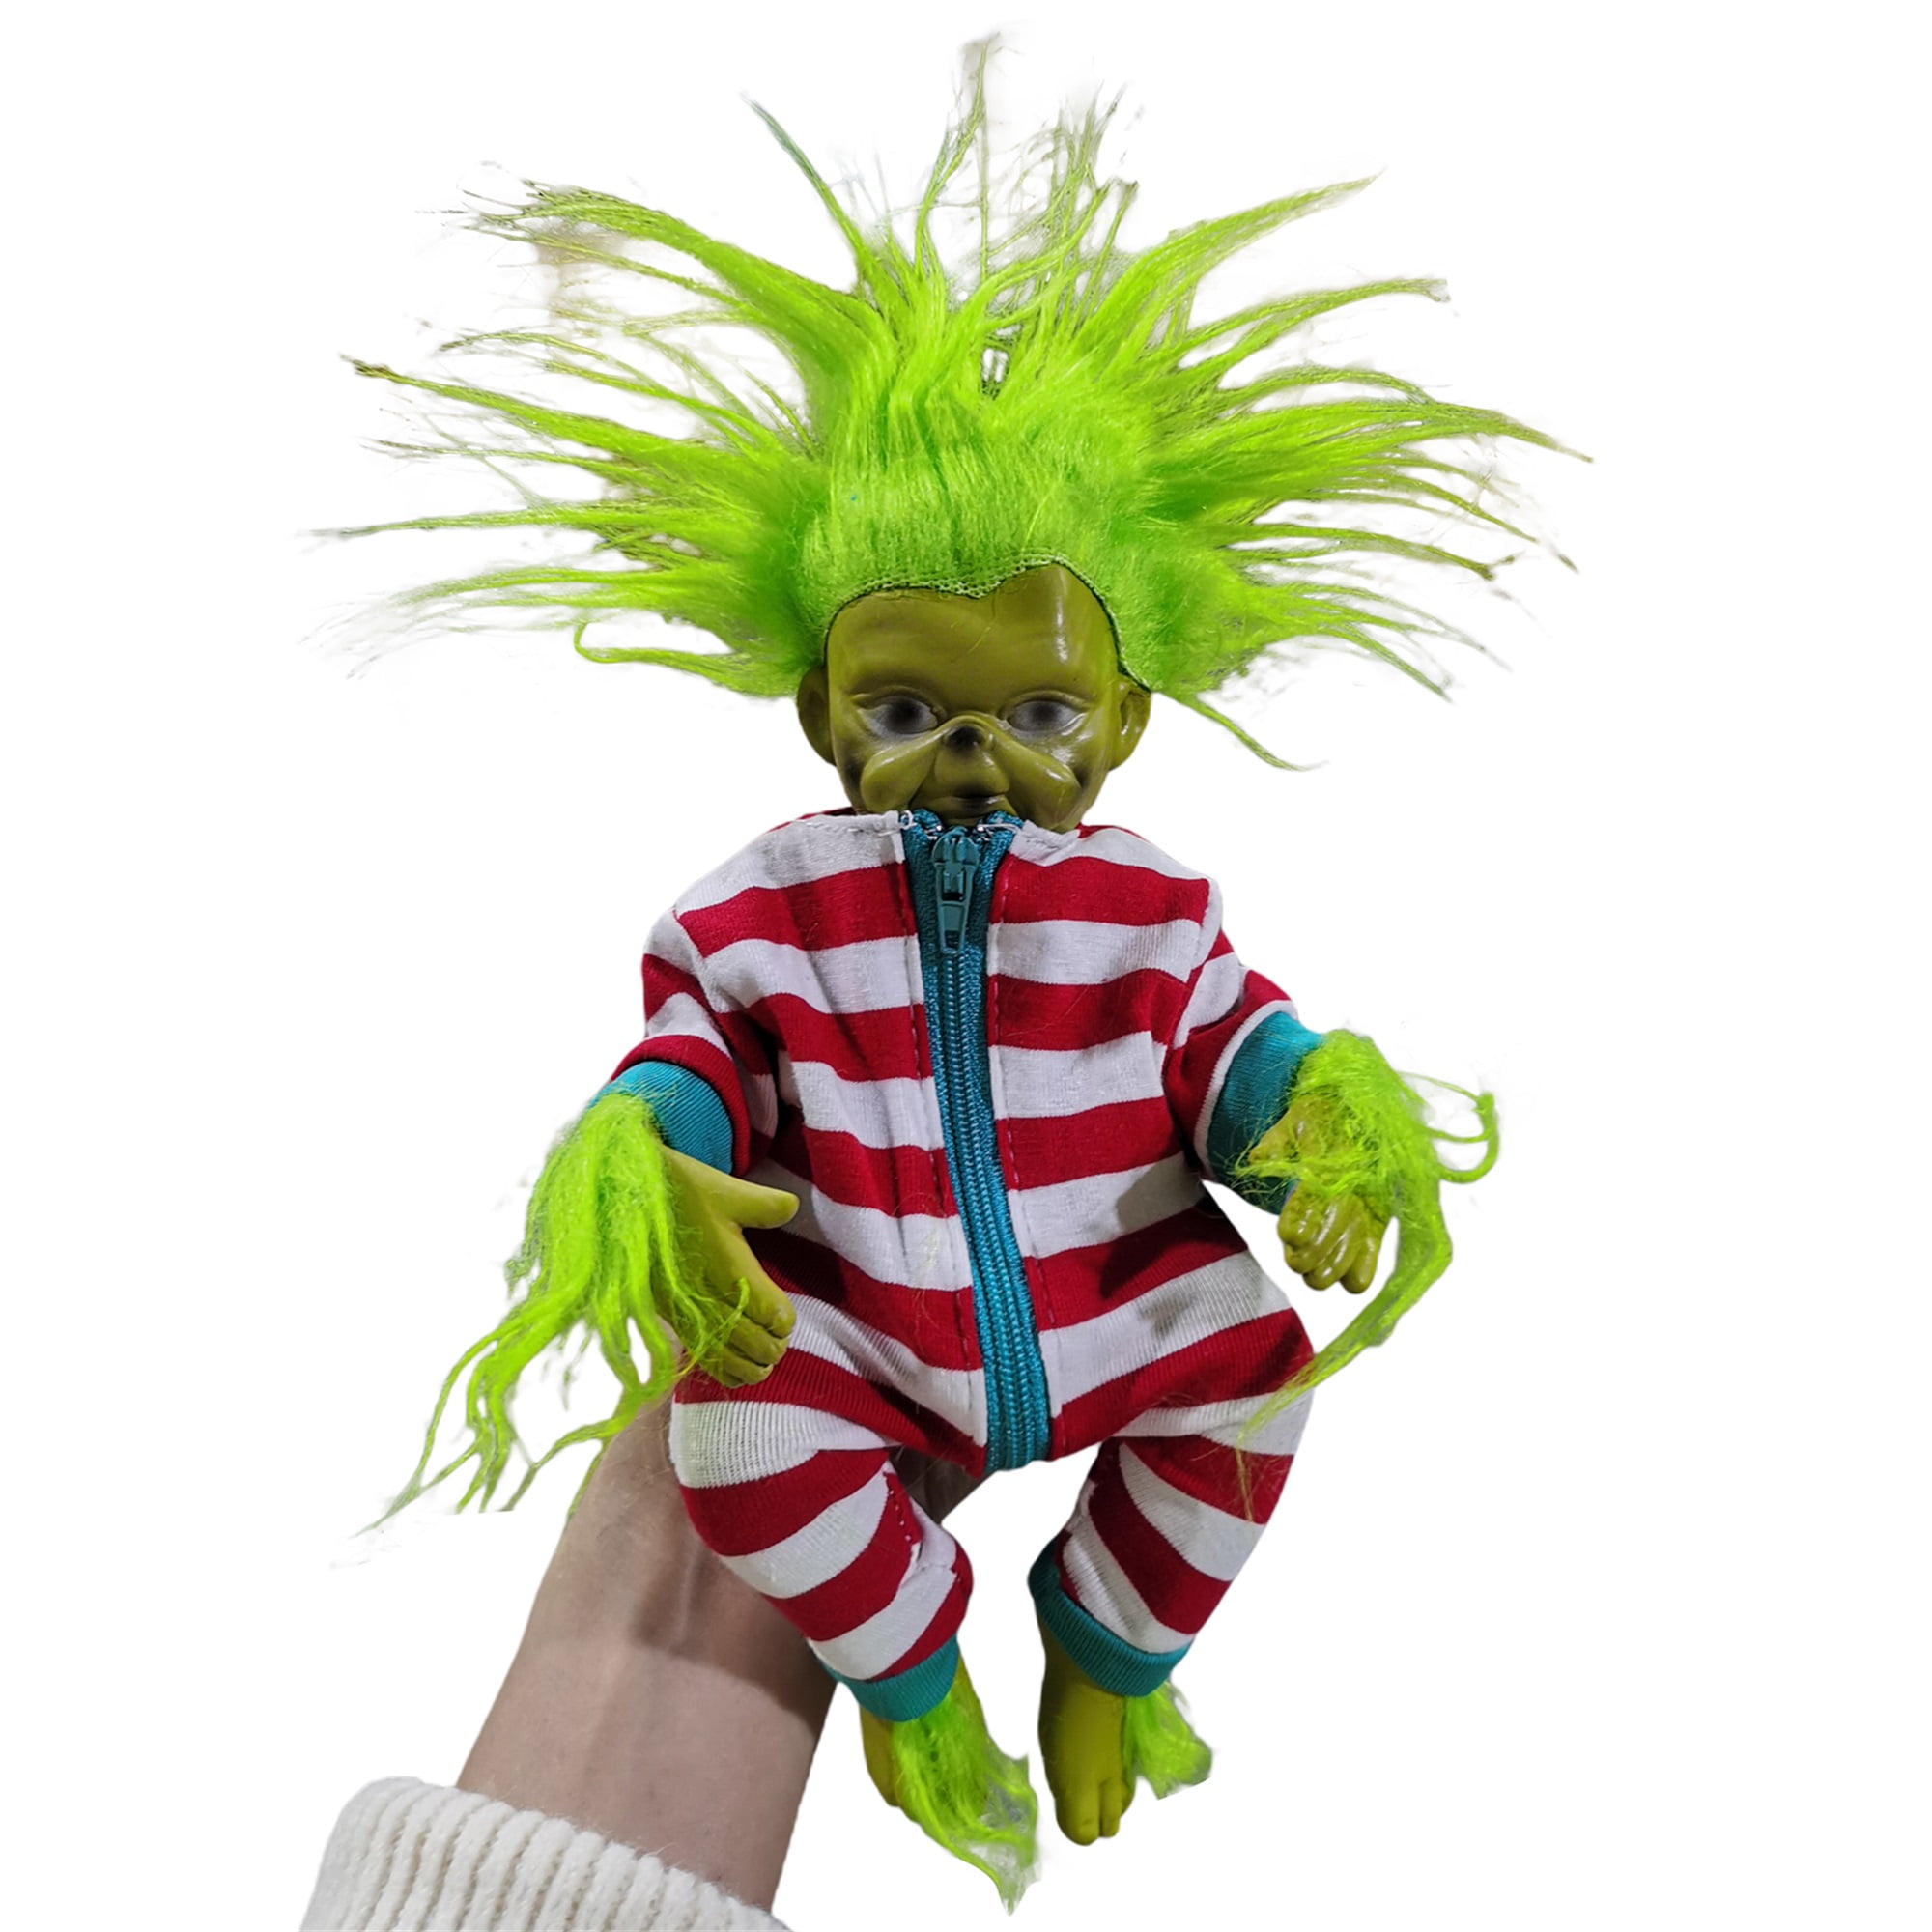 Christmas Ugly Dolls Plush Green Monster Doll, 10 Stuffed Animal